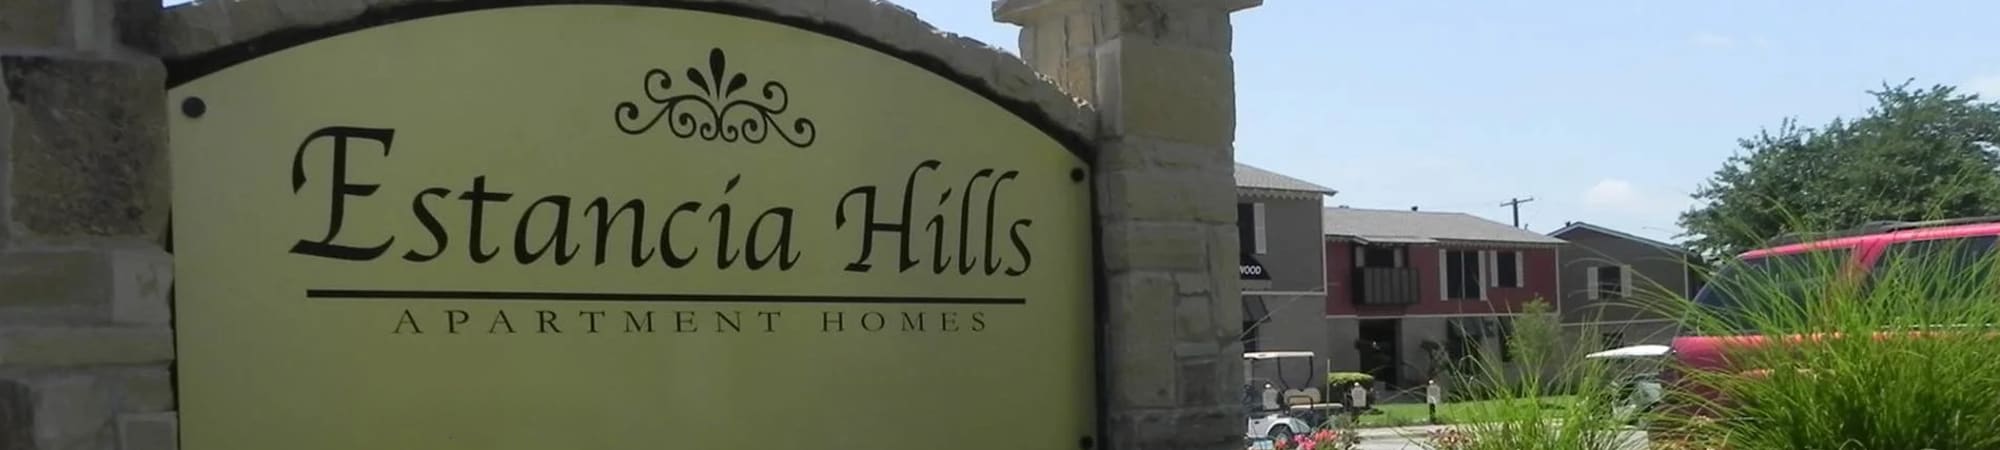 Virtual tour of Estancia Hills in Dallas, Texas